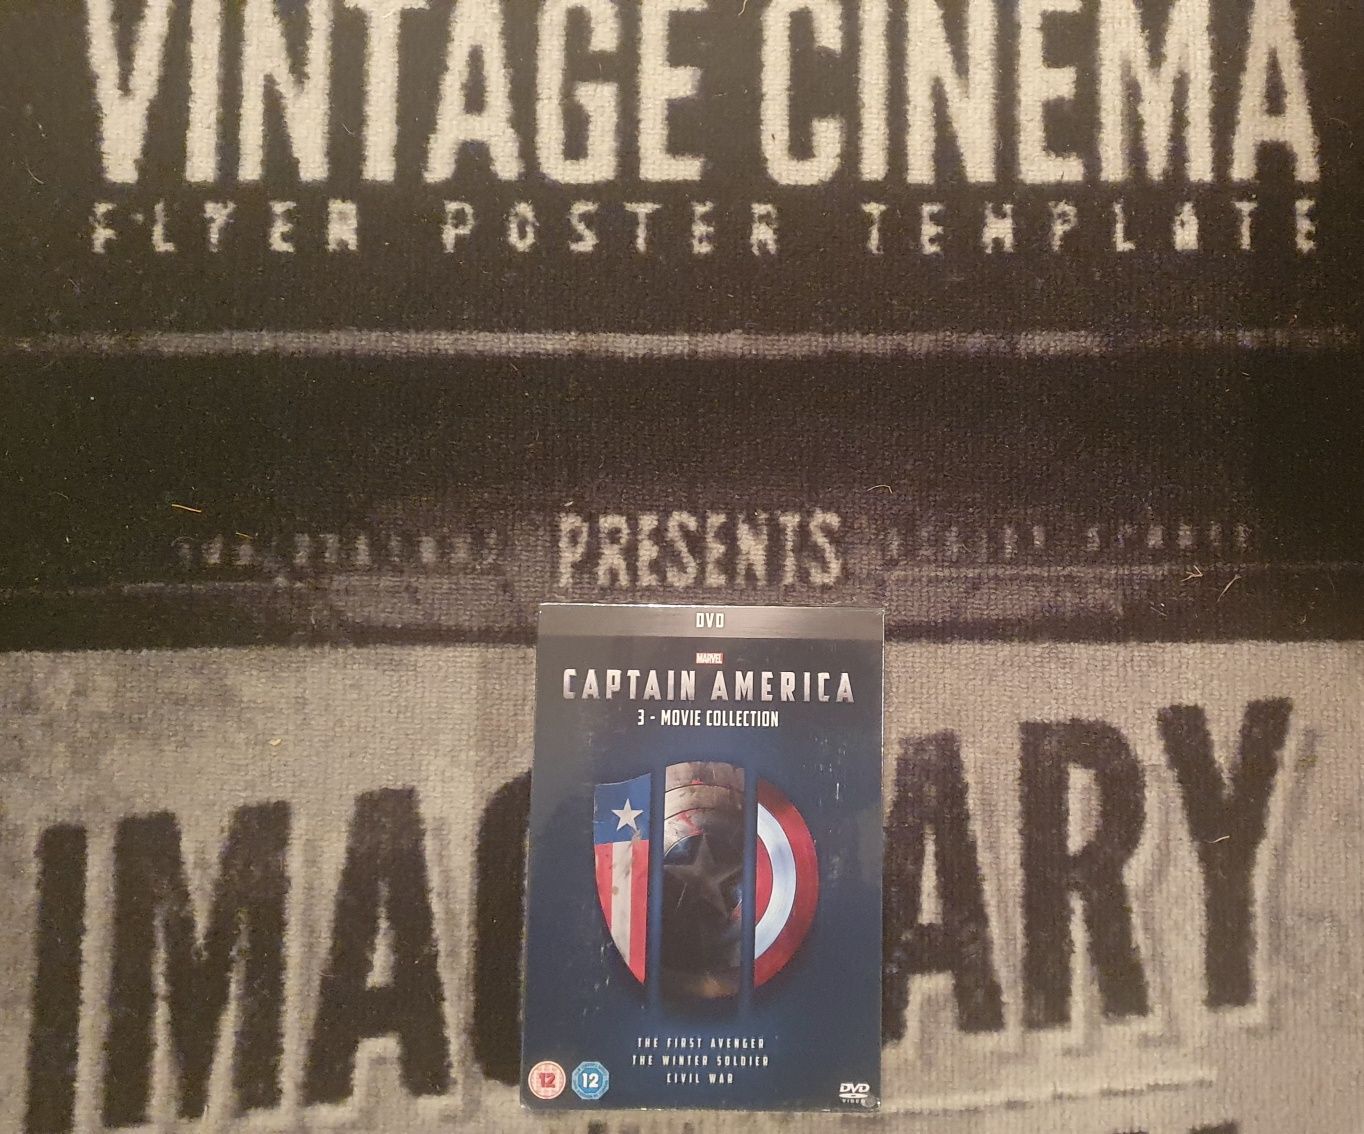 Filme Captain America 1-3 [DVD] Originale 
4.8 out of 5 stars(4,870)Or